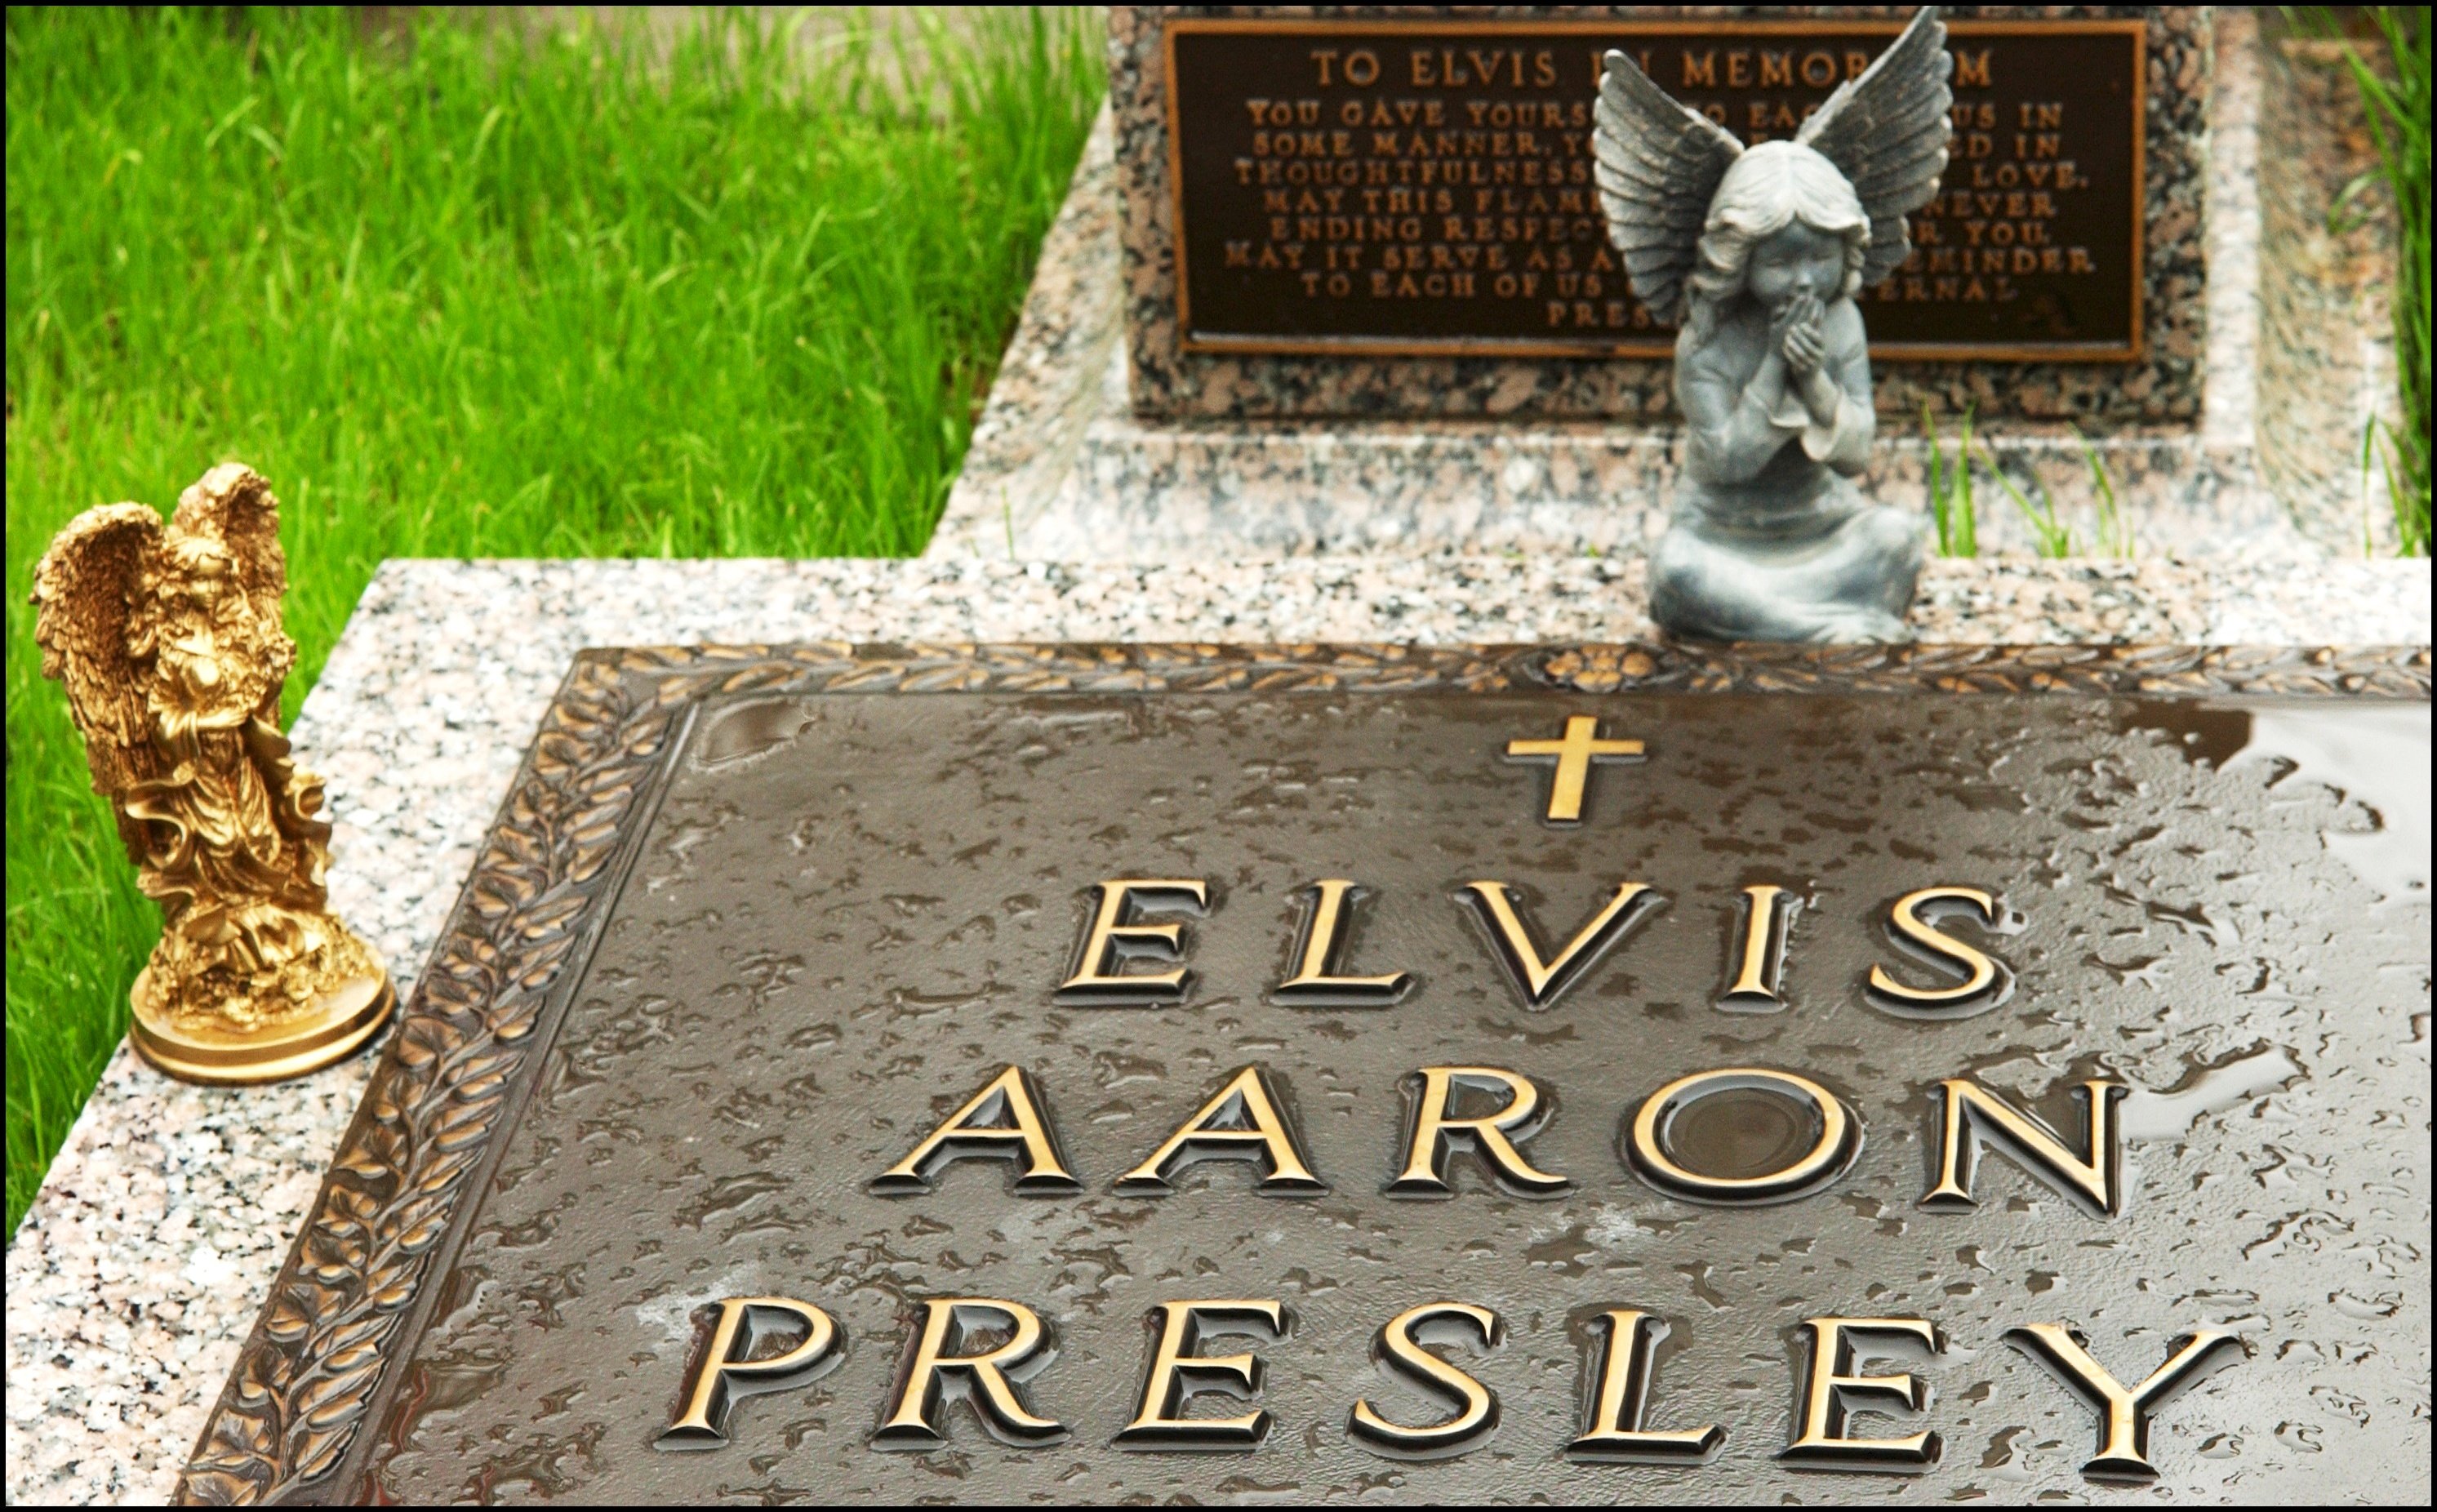 Angel statues at Elvis Presley's grave